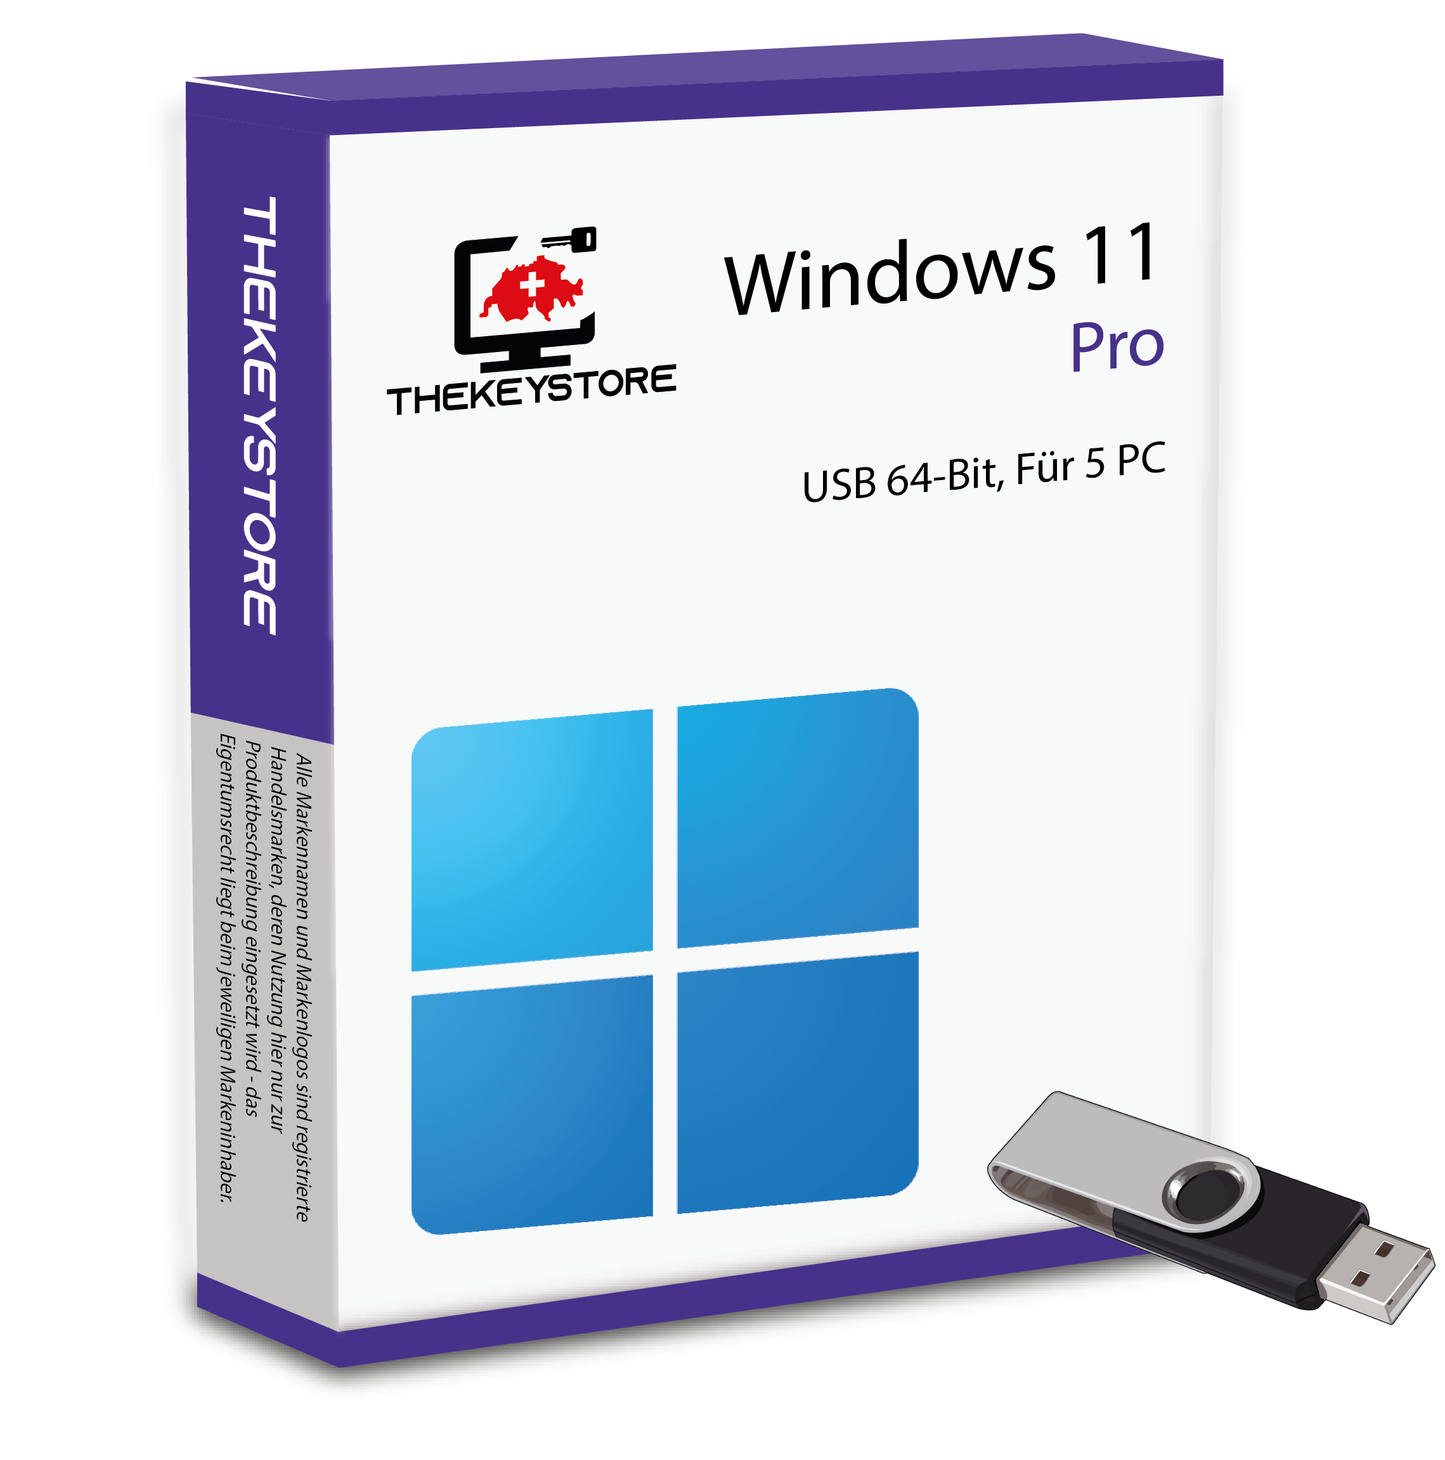 Microsoft Windows 11 Pro - Für 5 PC - TheKeyStore Schweiz